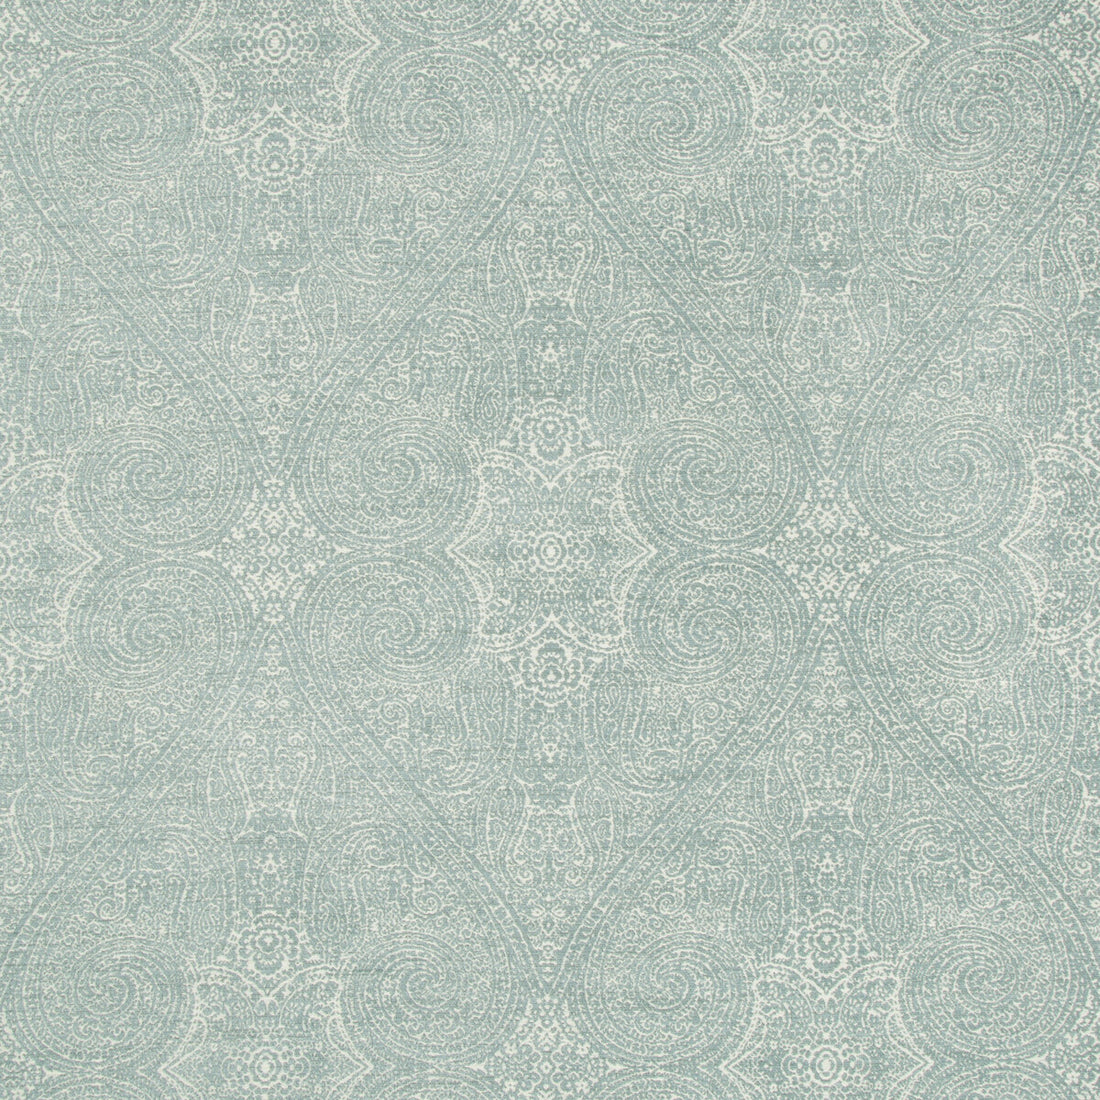 Kravet Design fabric in 34725-15 color - pattern 34725.15.0 - by Kravet Design in the Gis collection